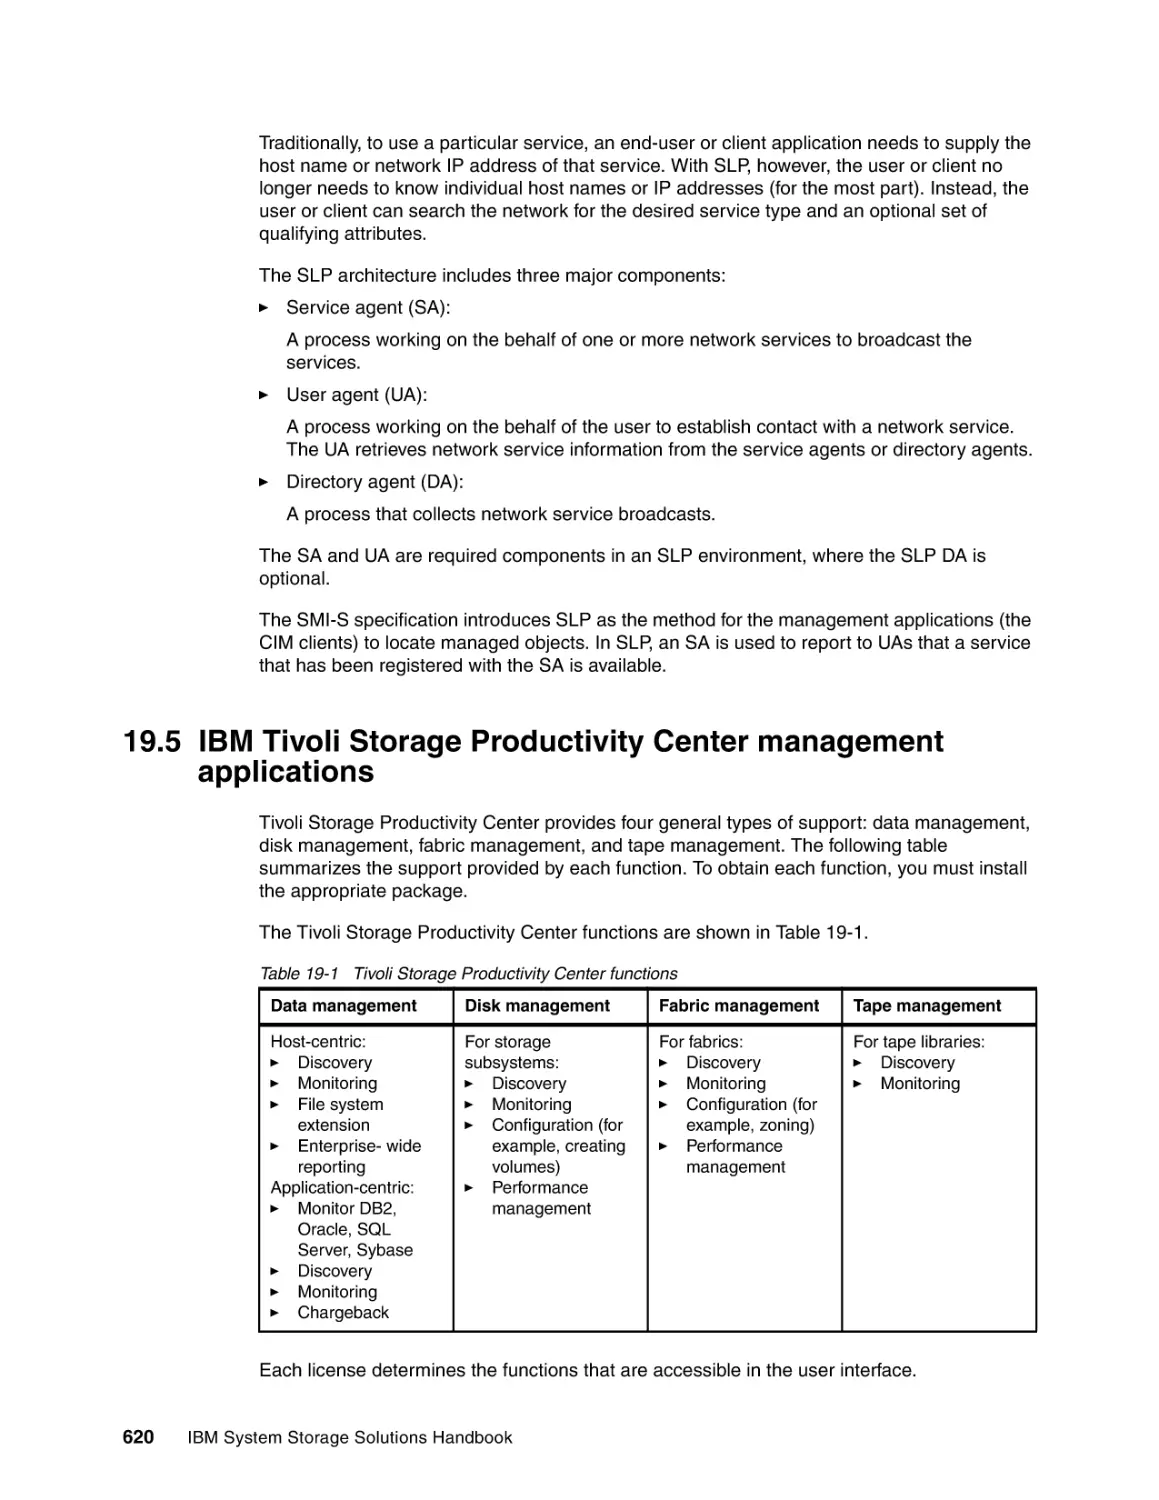 19.5 IBM Tivoli Storage Productivity Center management applications